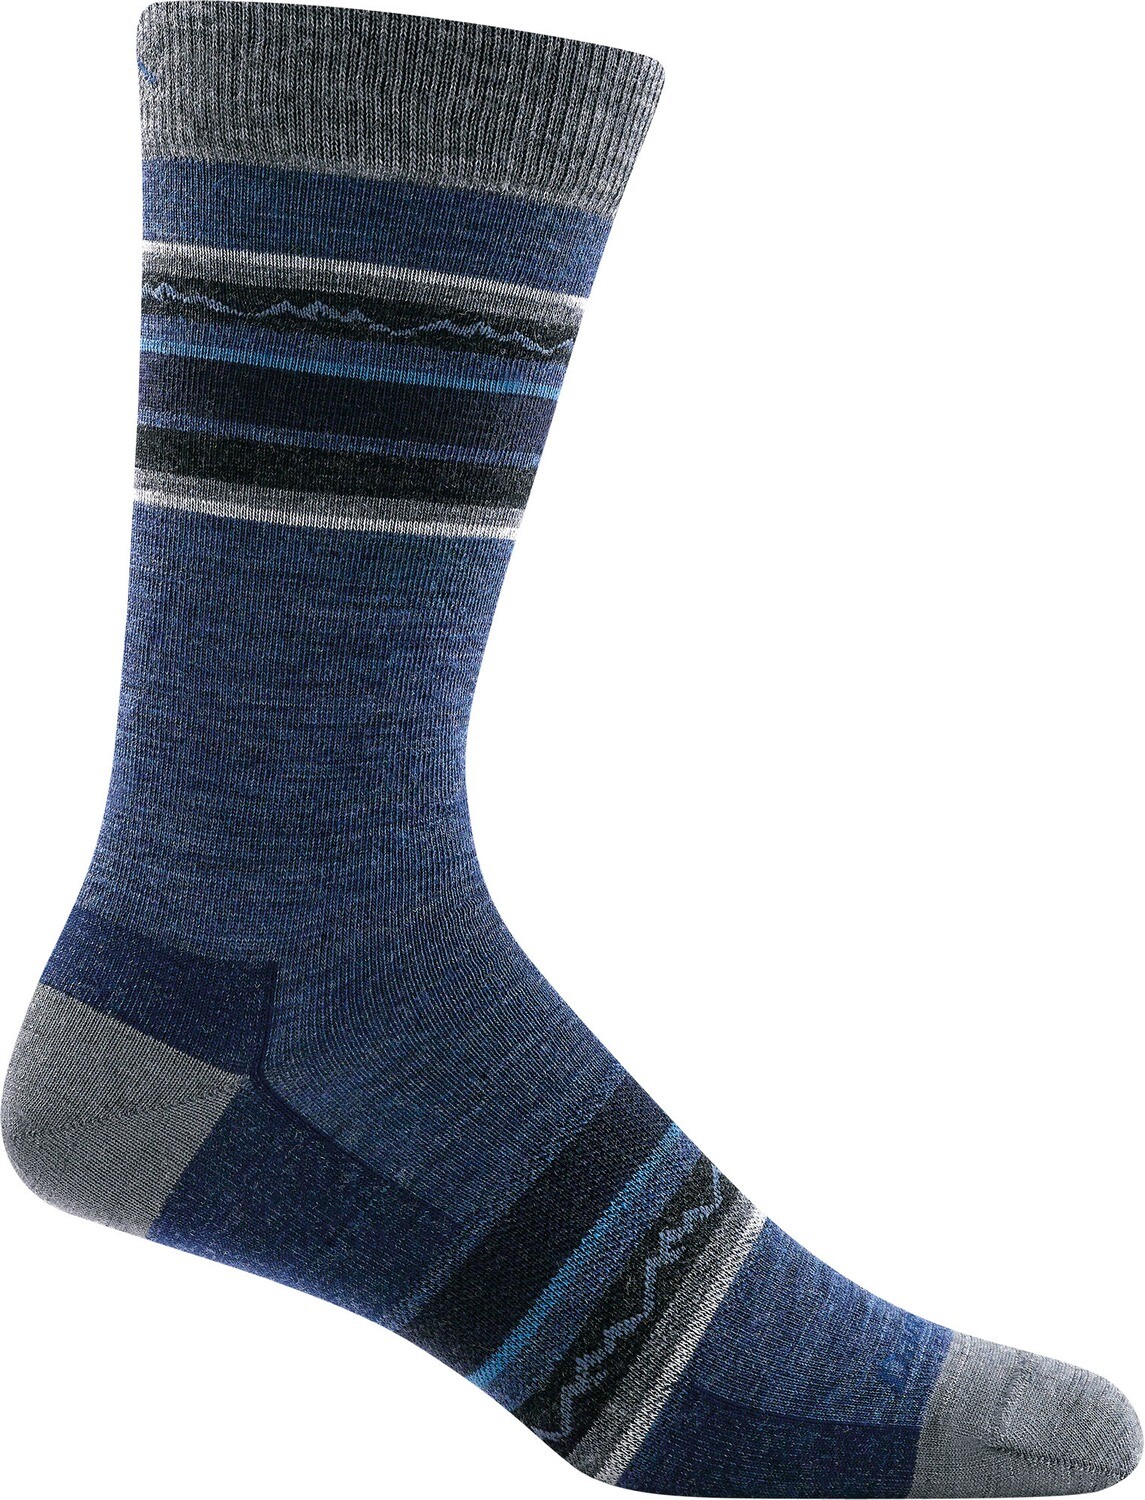 Men's/Unisex 6009 Whetstone Lightweight Lifestyle Sock